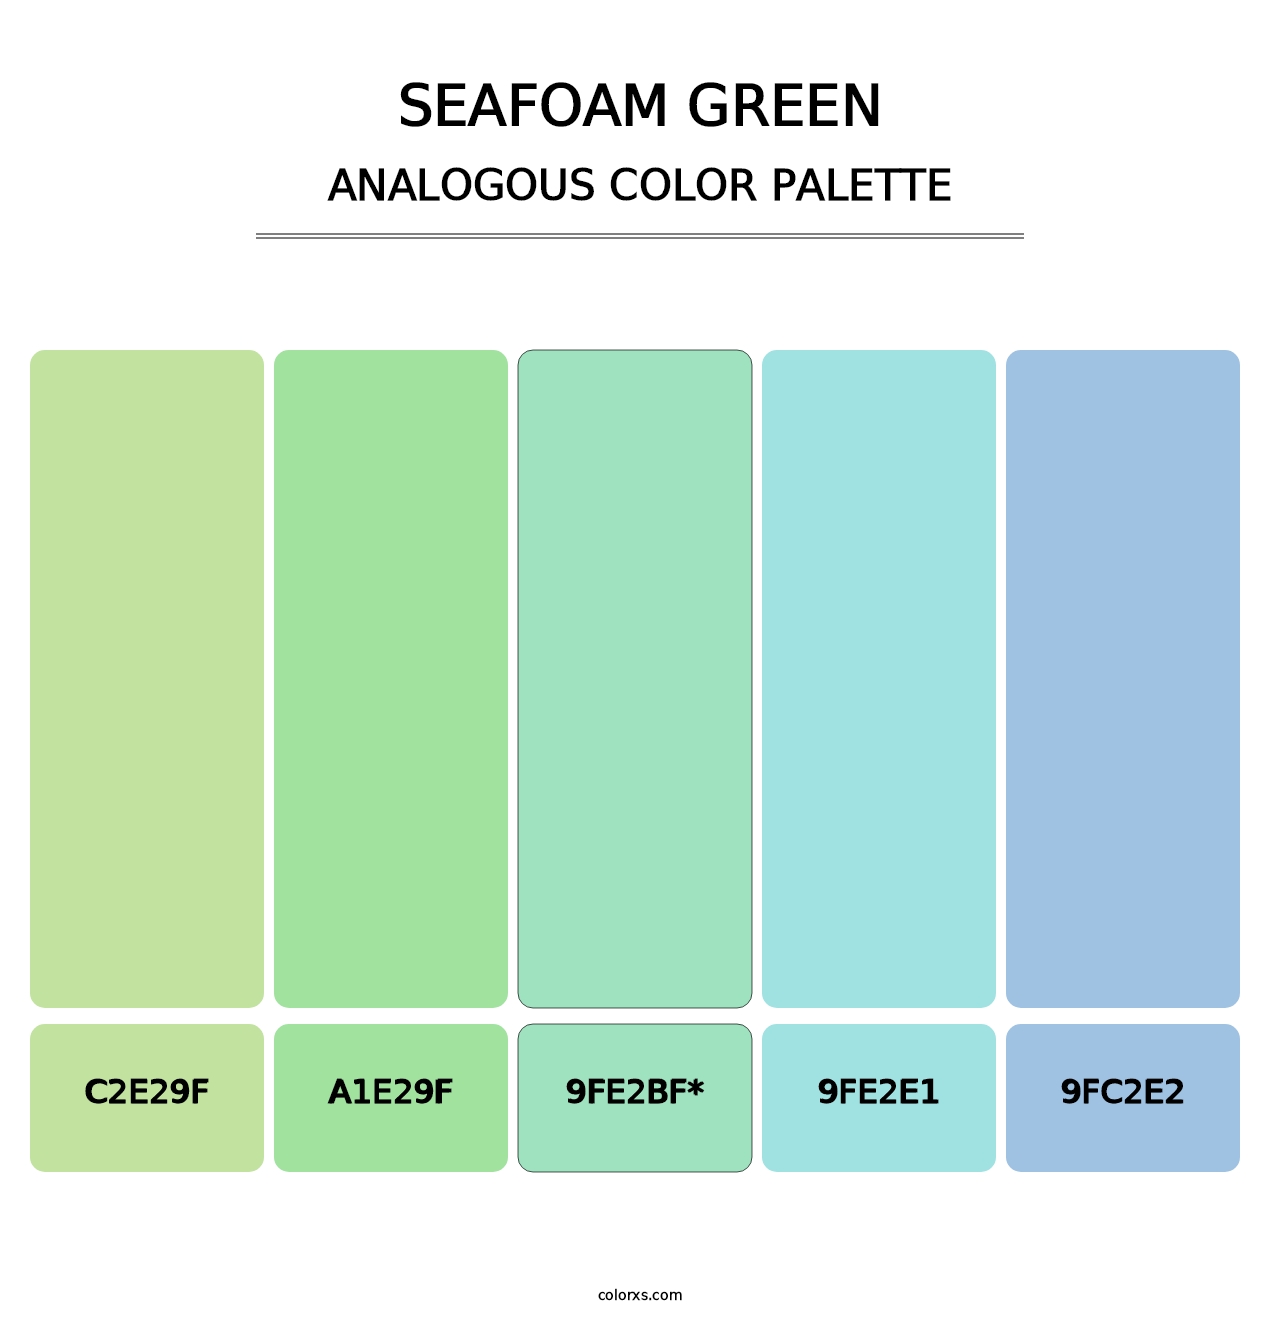 Seafoam Green - Analogous Color Palette